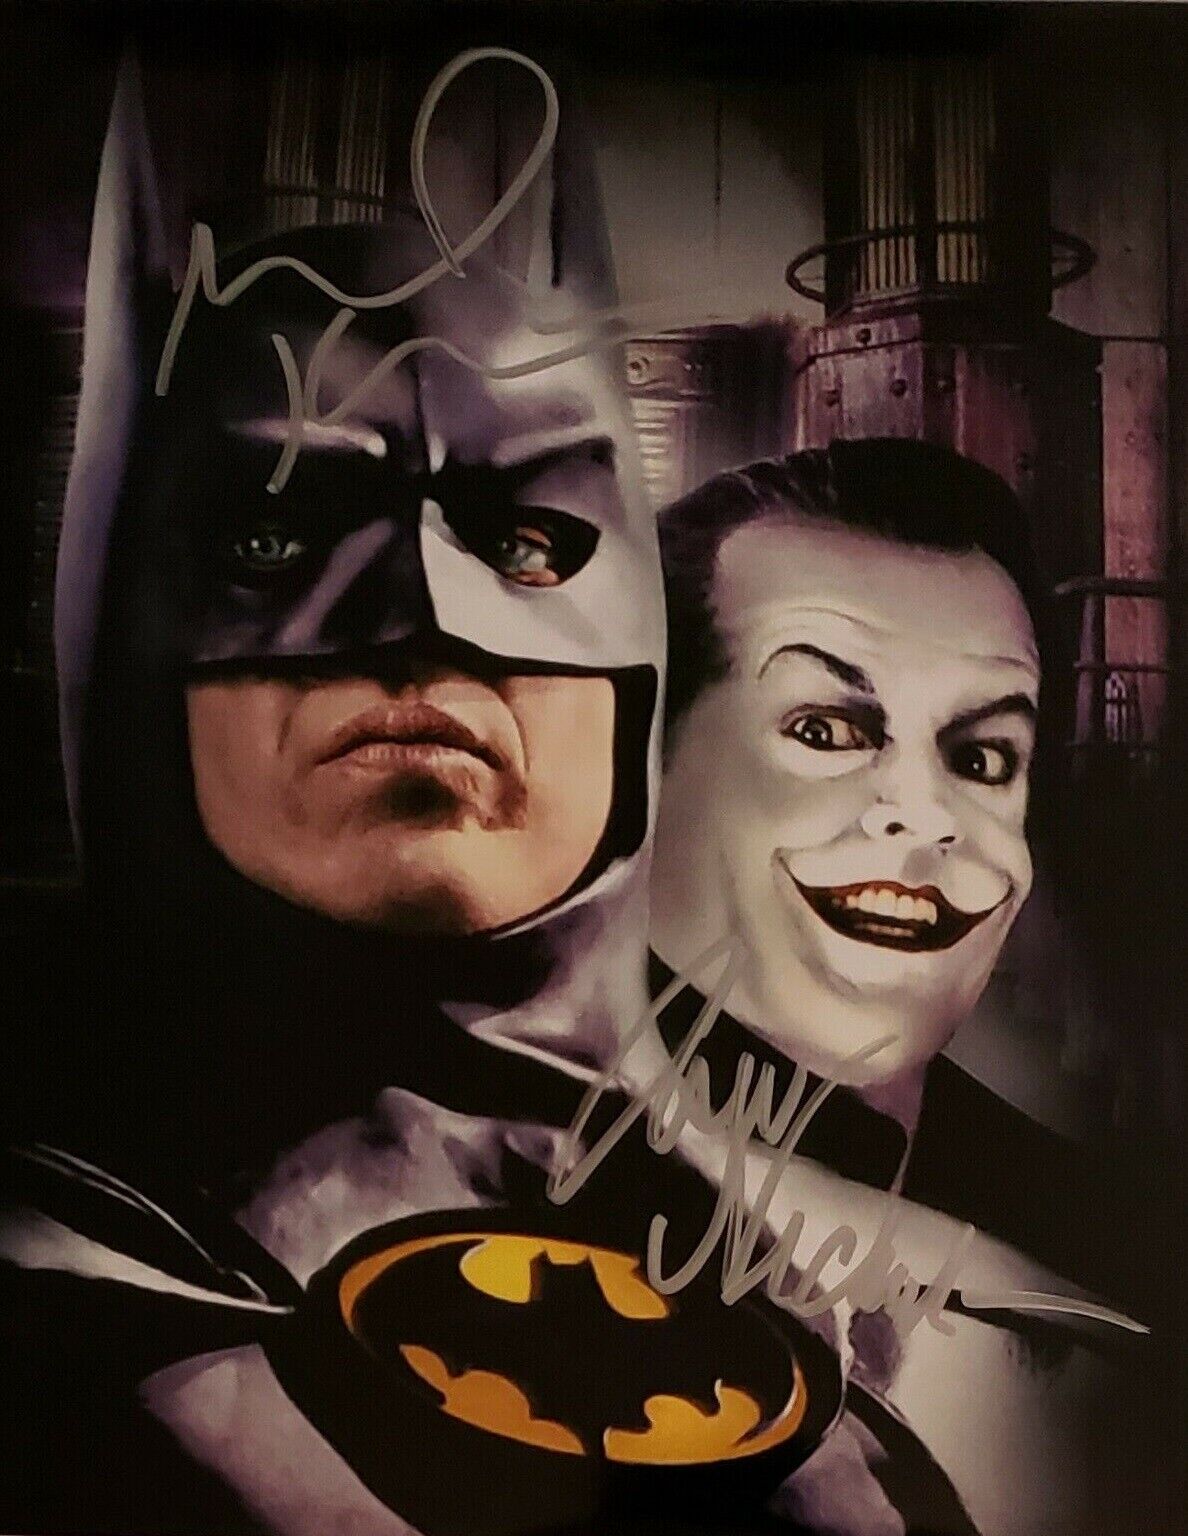 Michael Keaton / Jack Nicholson Autographed Signed 8x10 Photo Poster painting ( Batman ) REPRINT